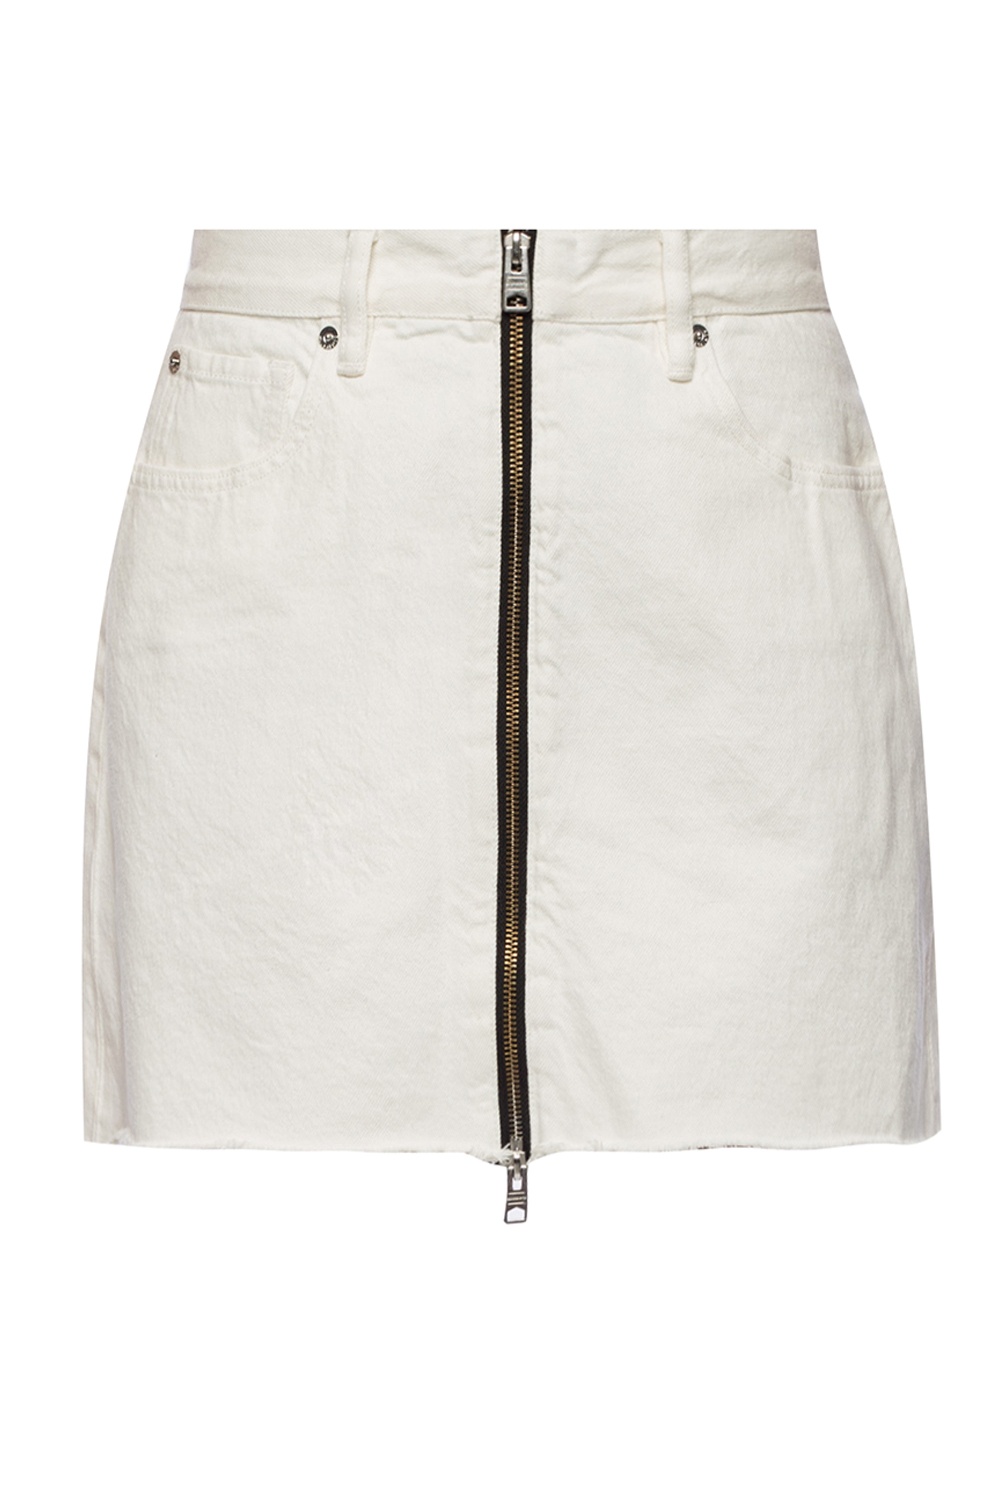 white denim skirt canada